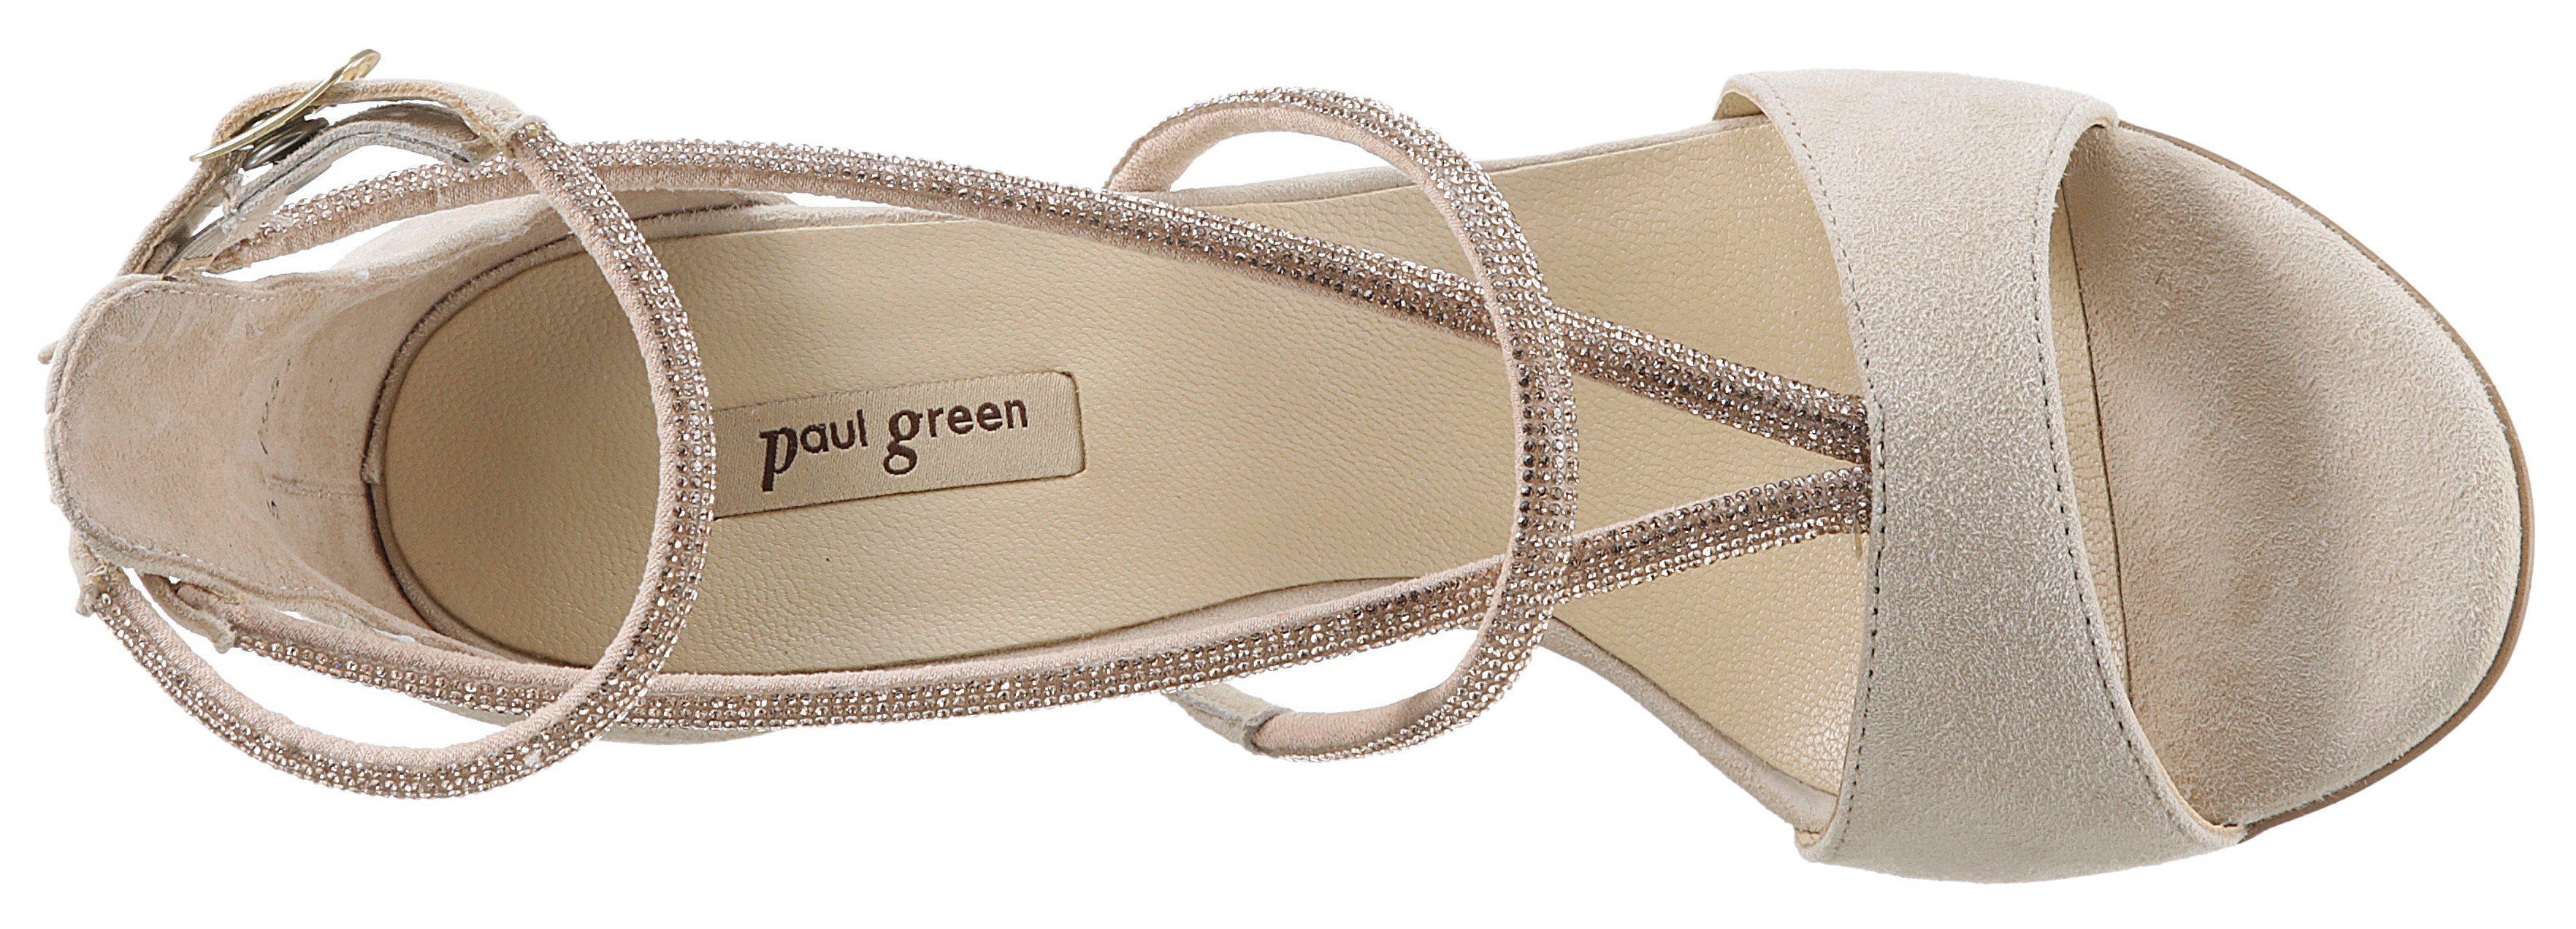 Paul Green eleganter in Sandalette beige Optik